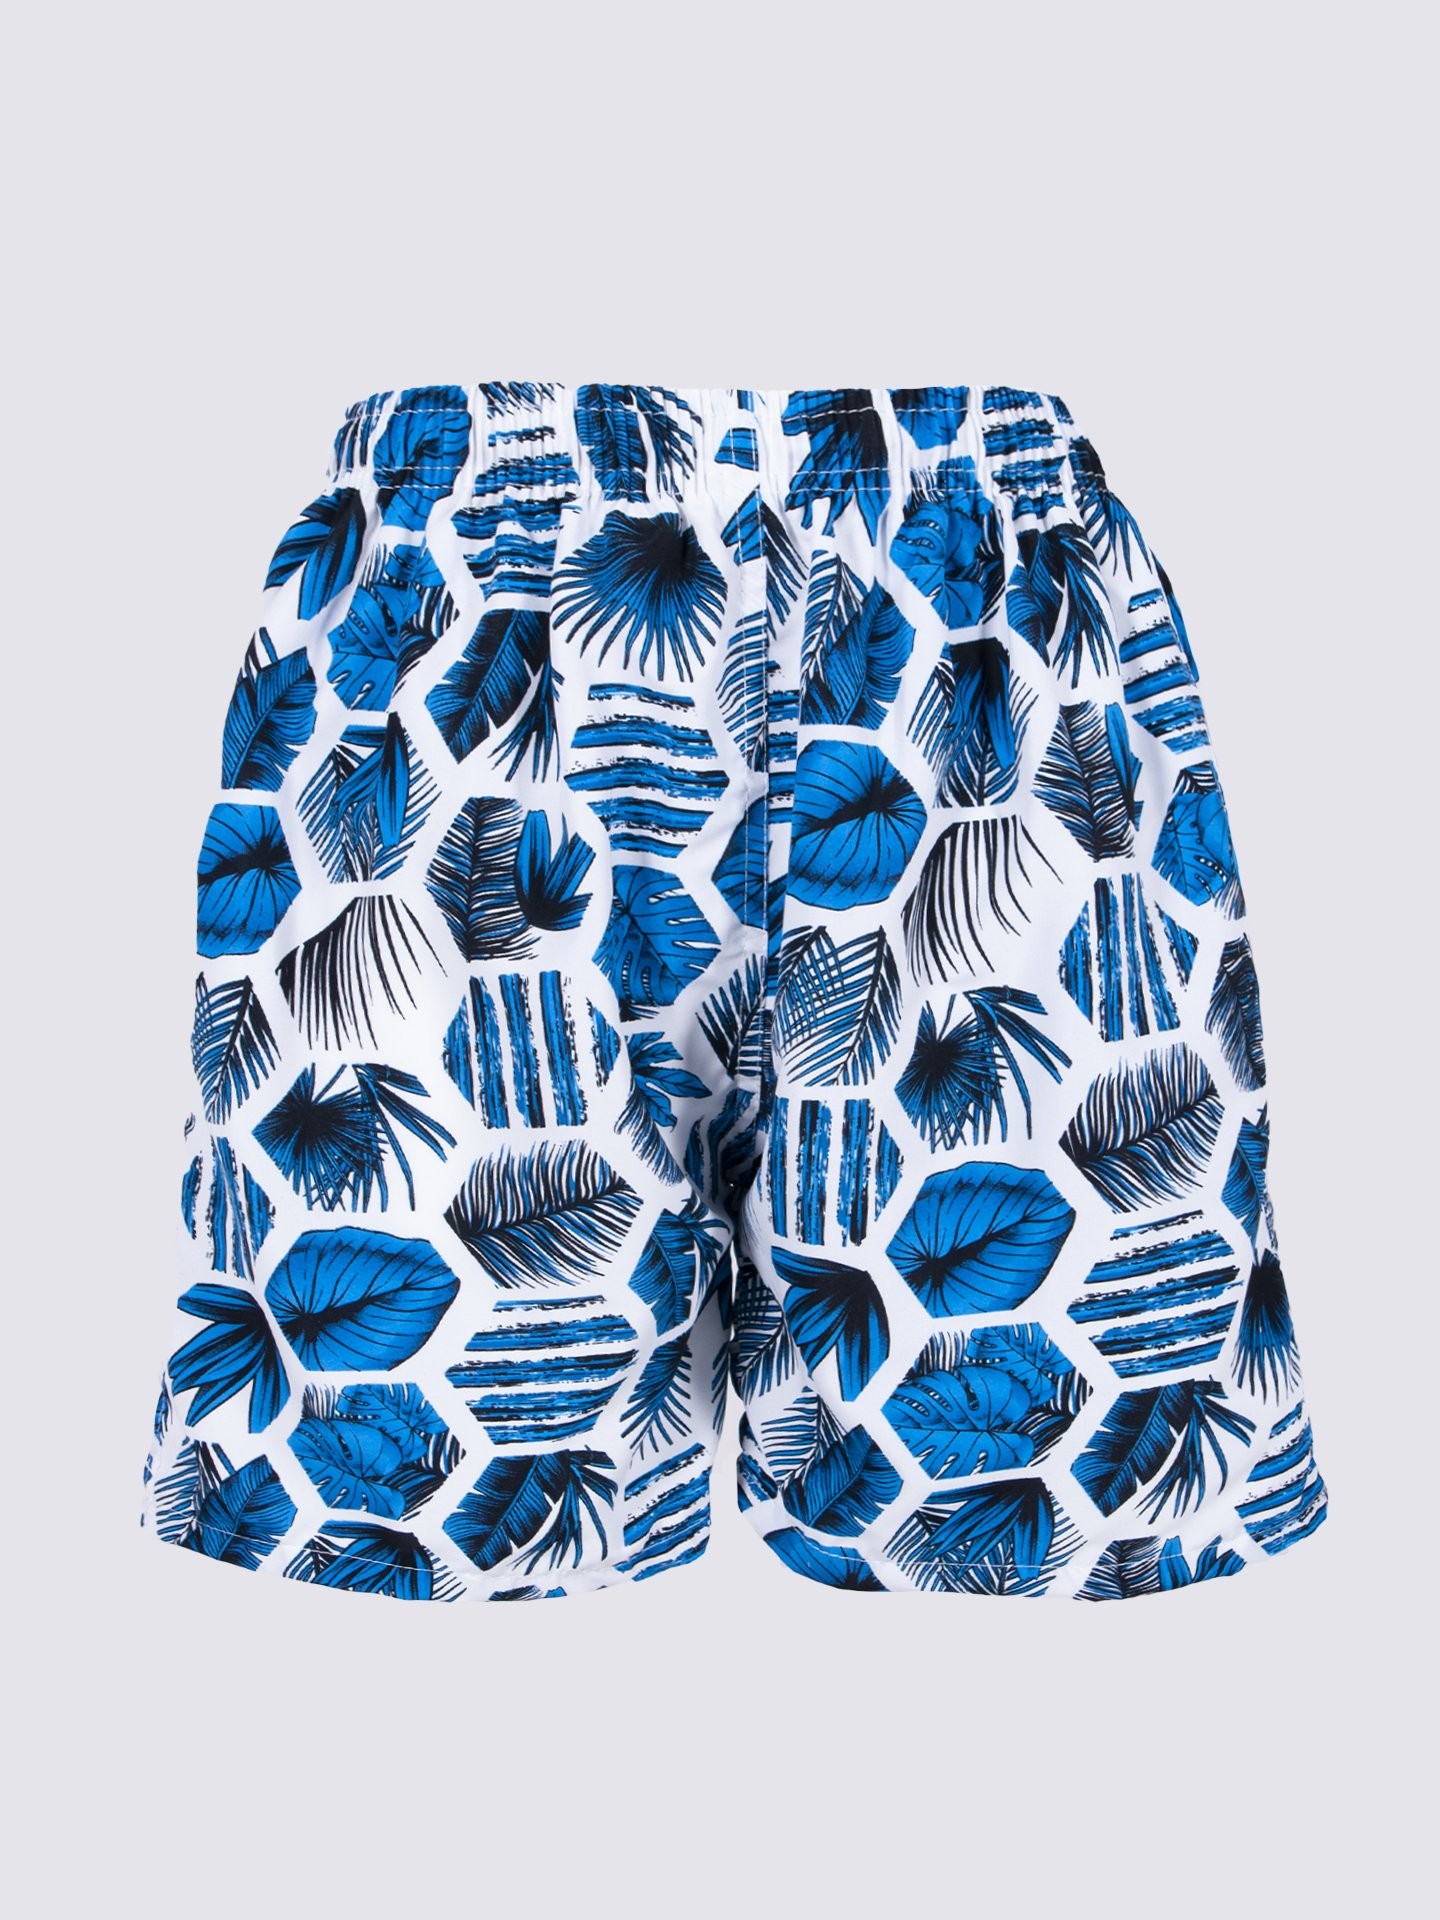 Yoclub Man's Men's Beach Shorts LKS-0044F-A100 Navy Blue